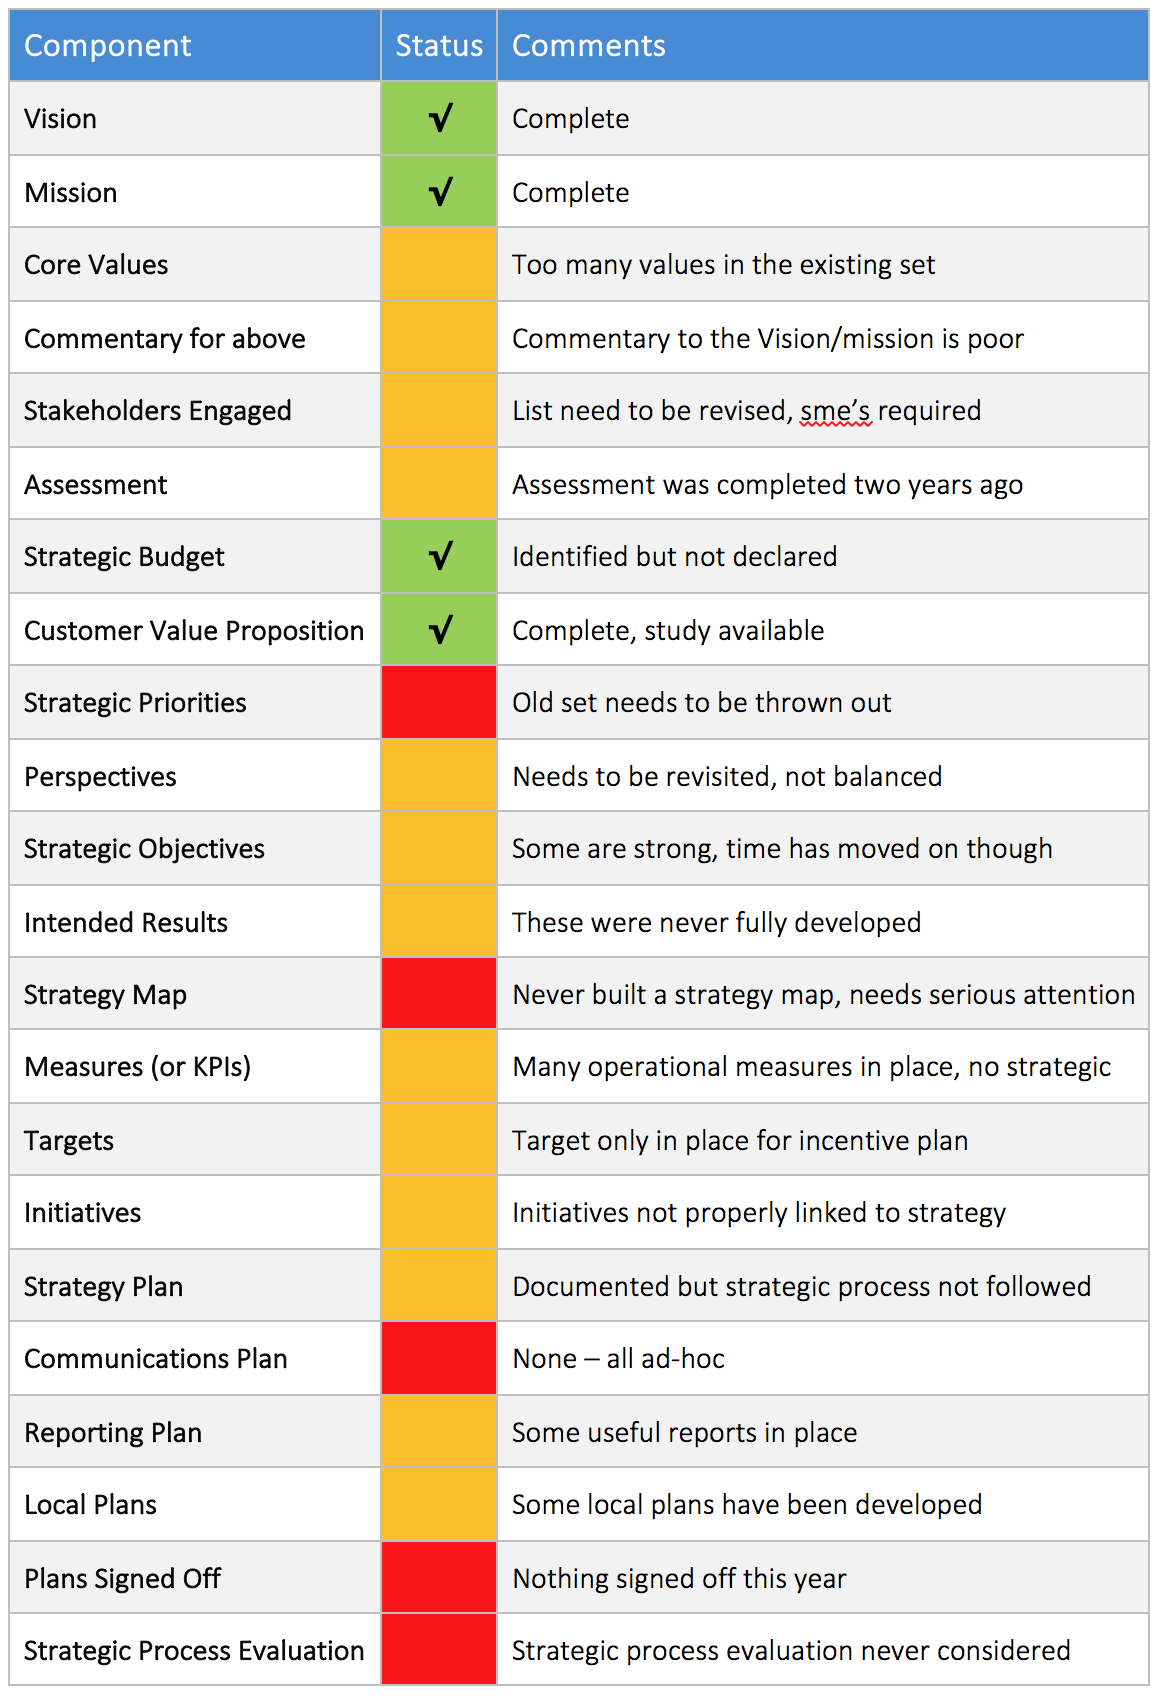 Strategic Planning Checklist | Intrafocus